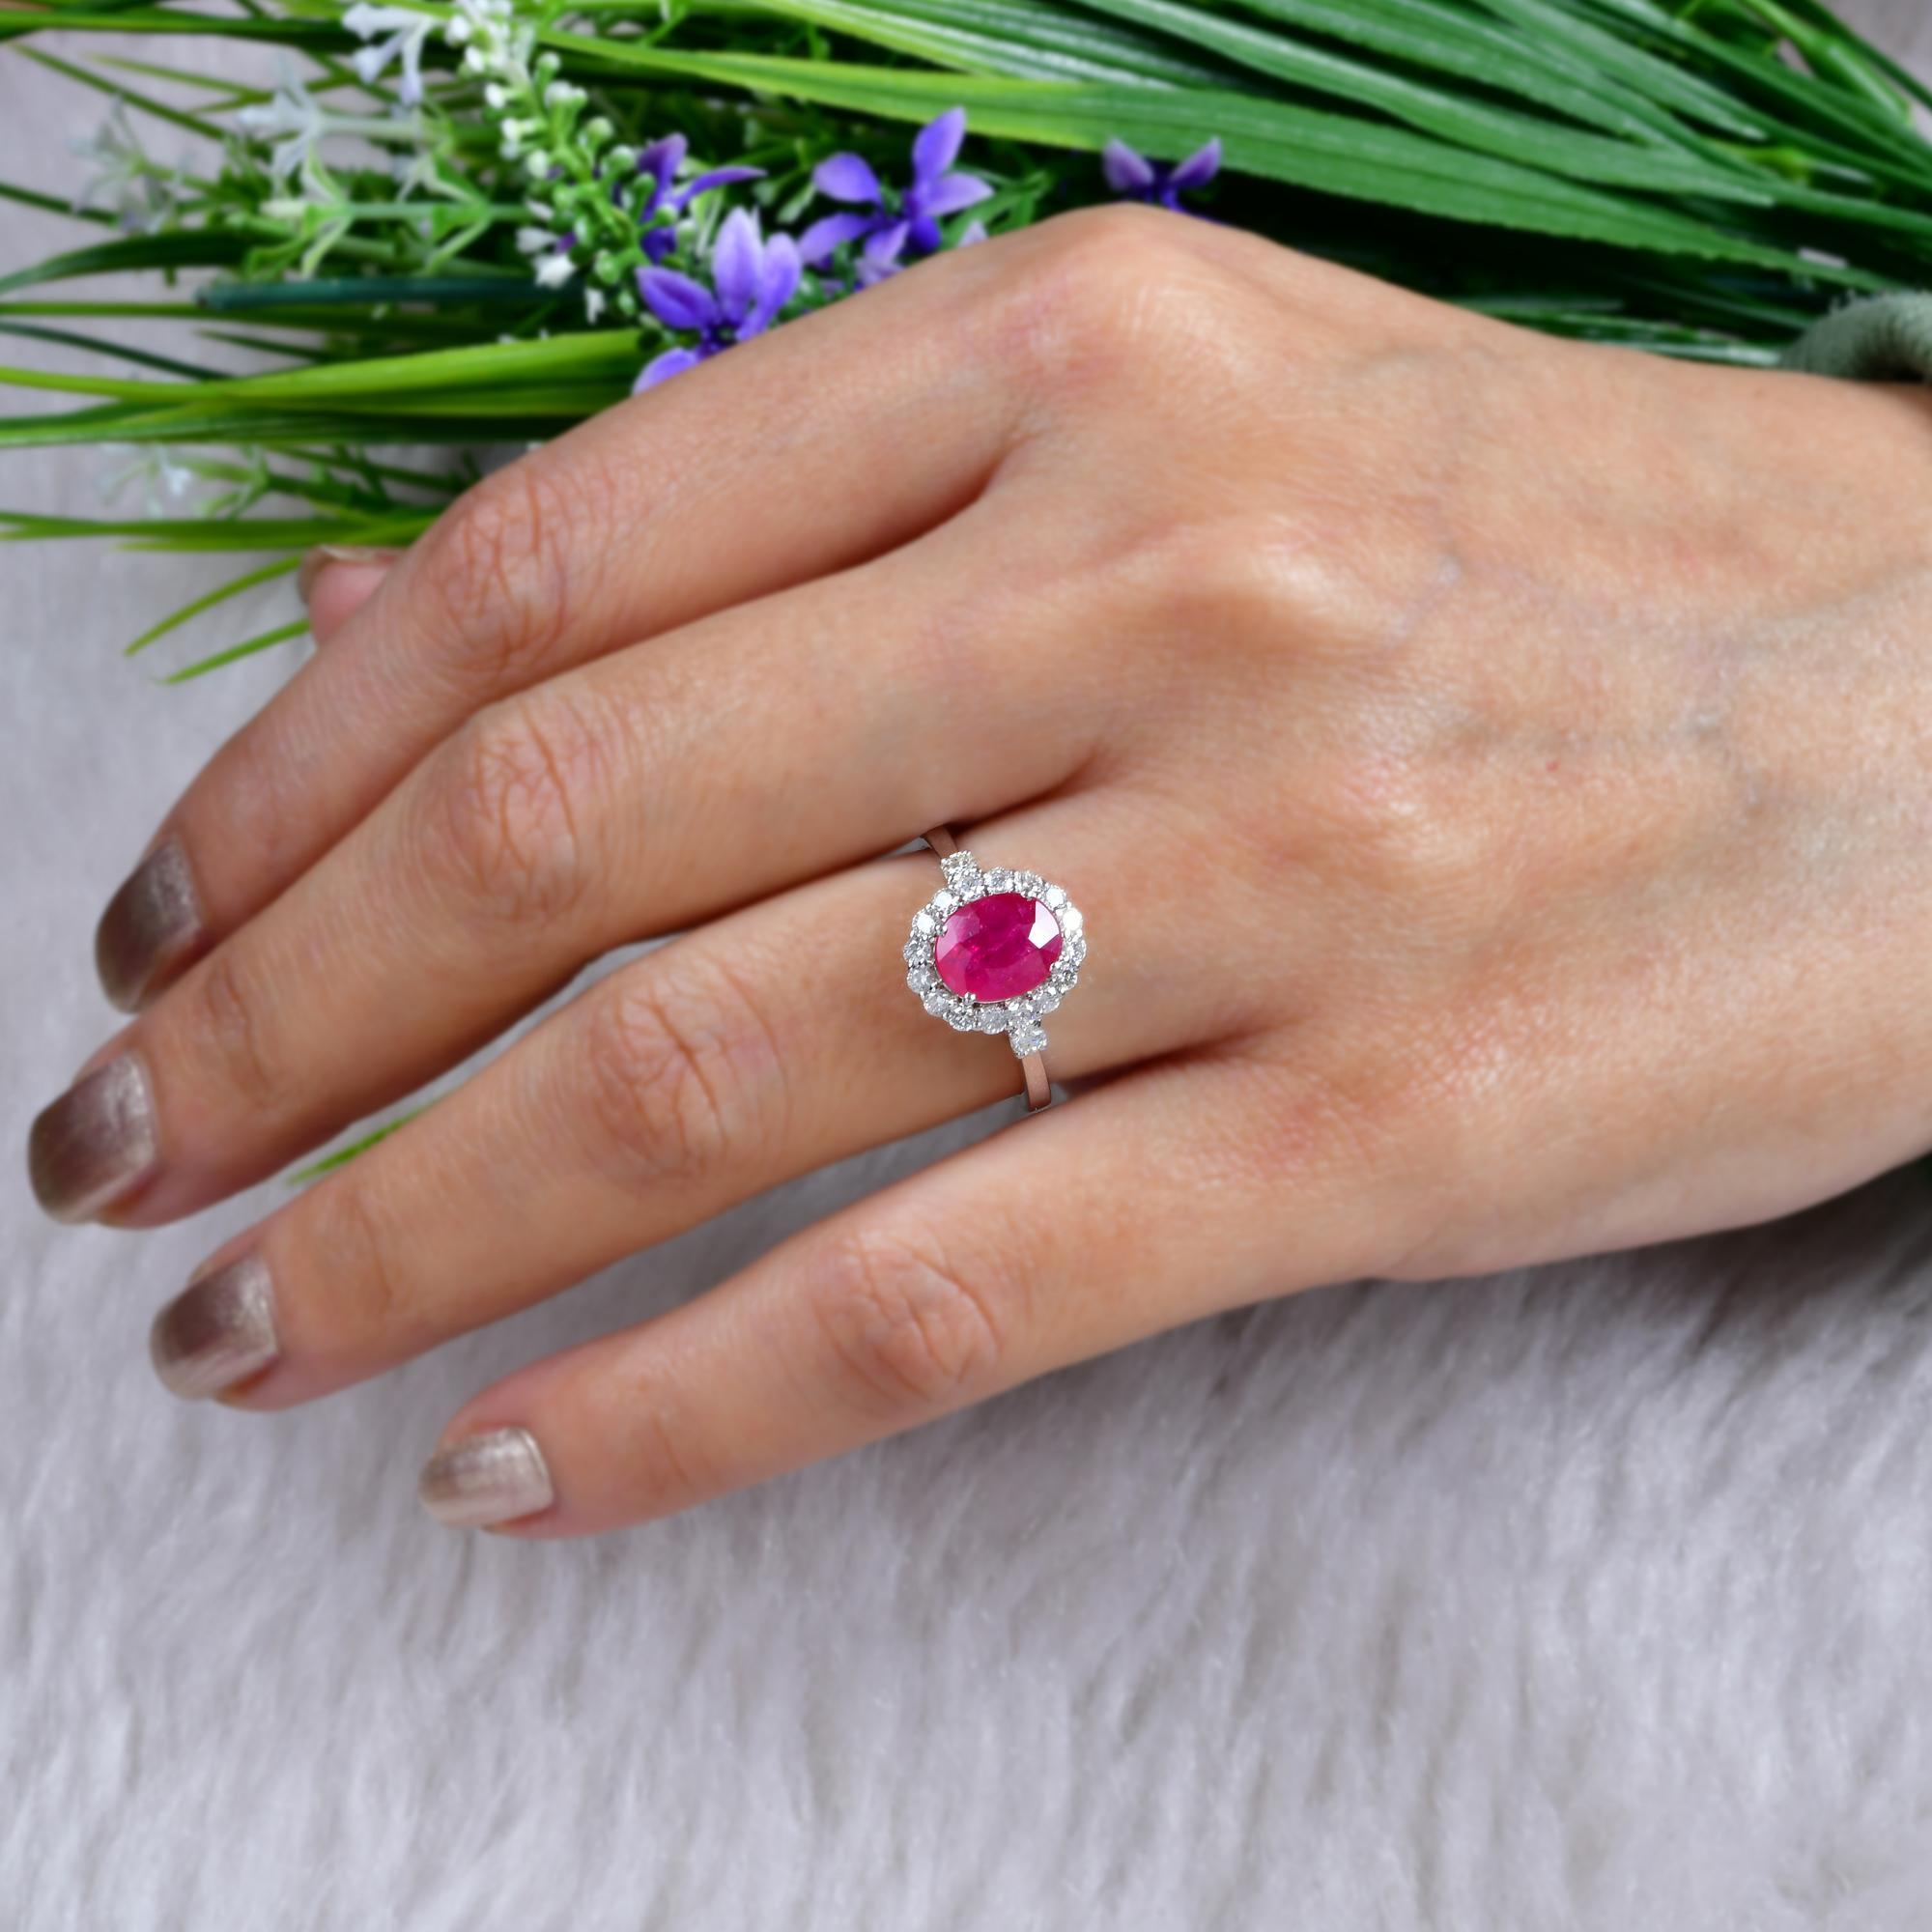 Women's Oval Shape Ruby Gemstone Cocktail Ring Diamond 14 Karat White Gold Fine Jewelry For Sale